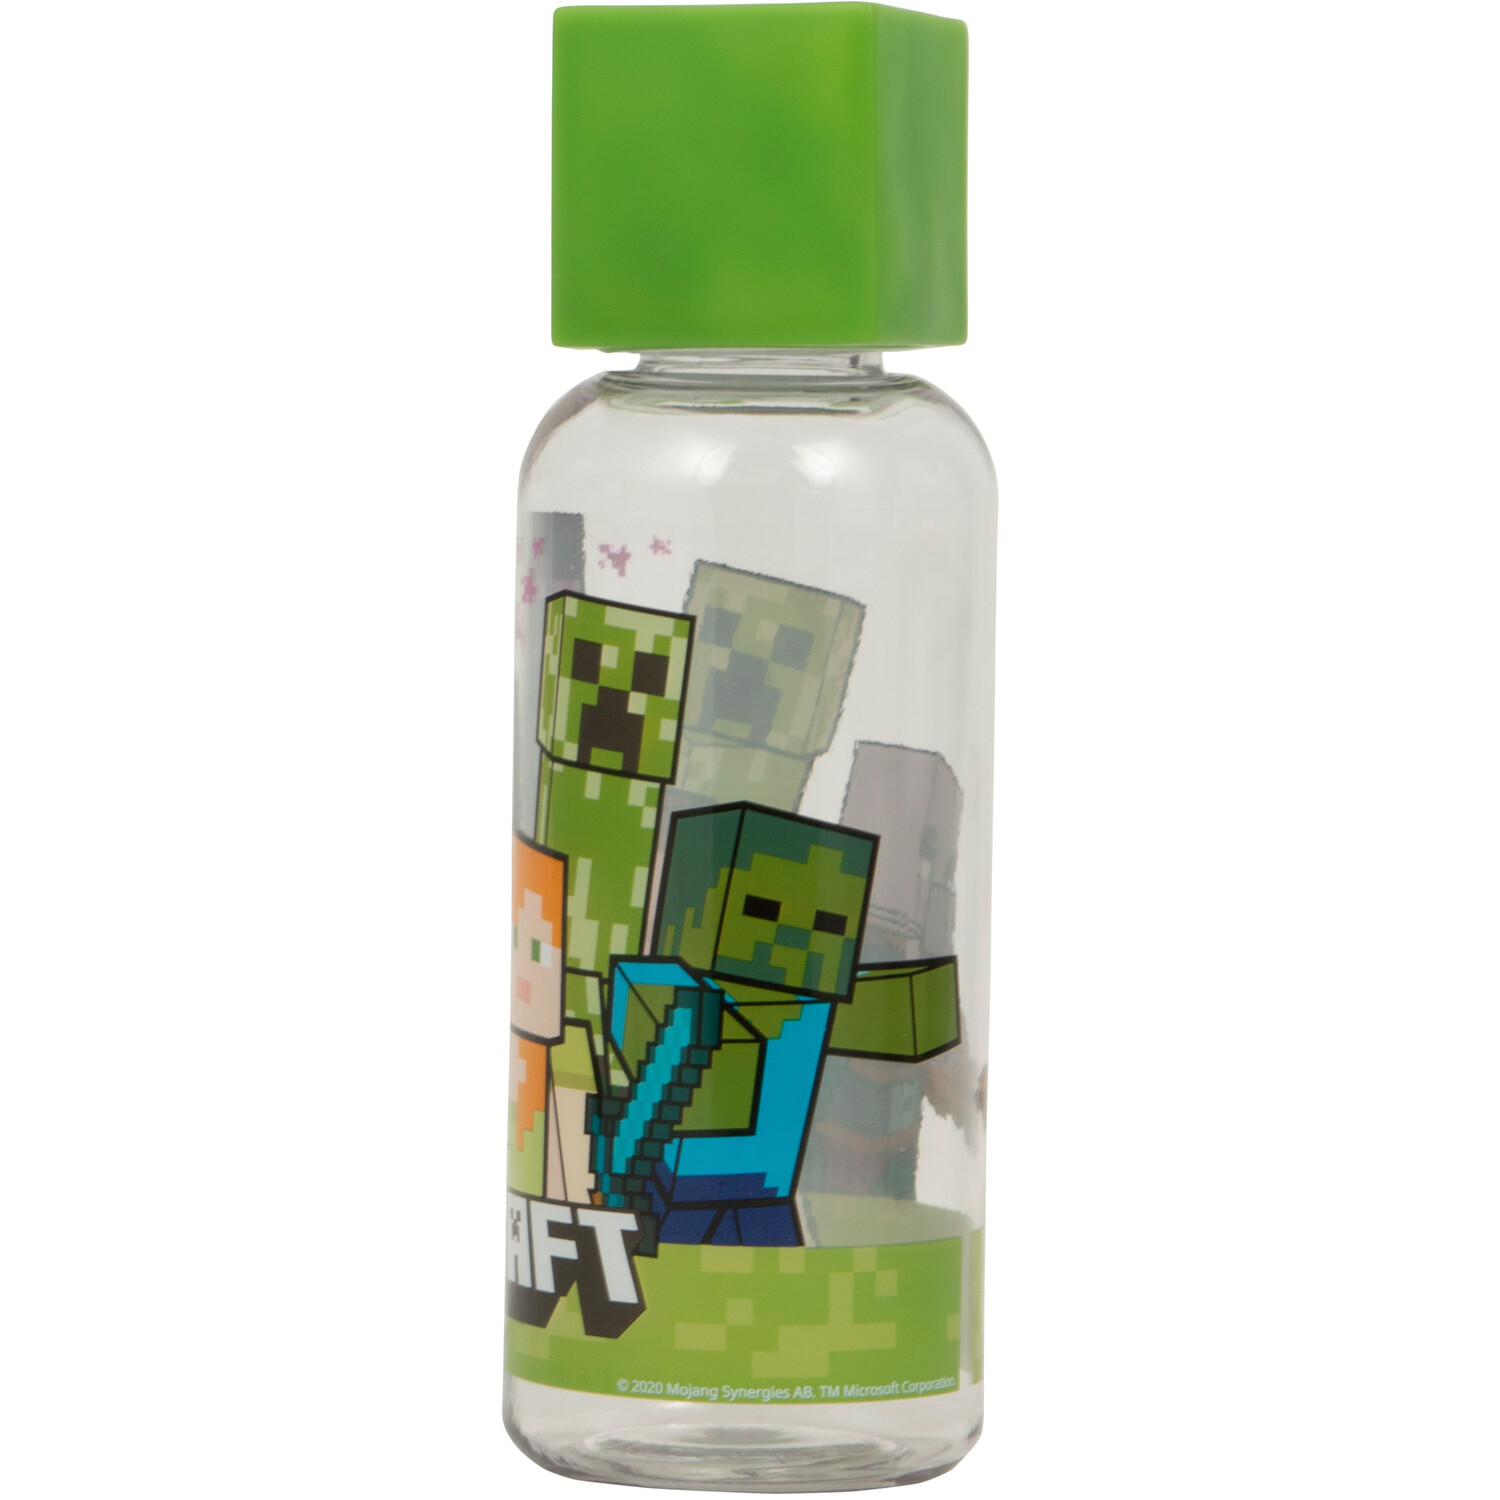 3D Minecraft Licensed Water Bottle - Green Image 3